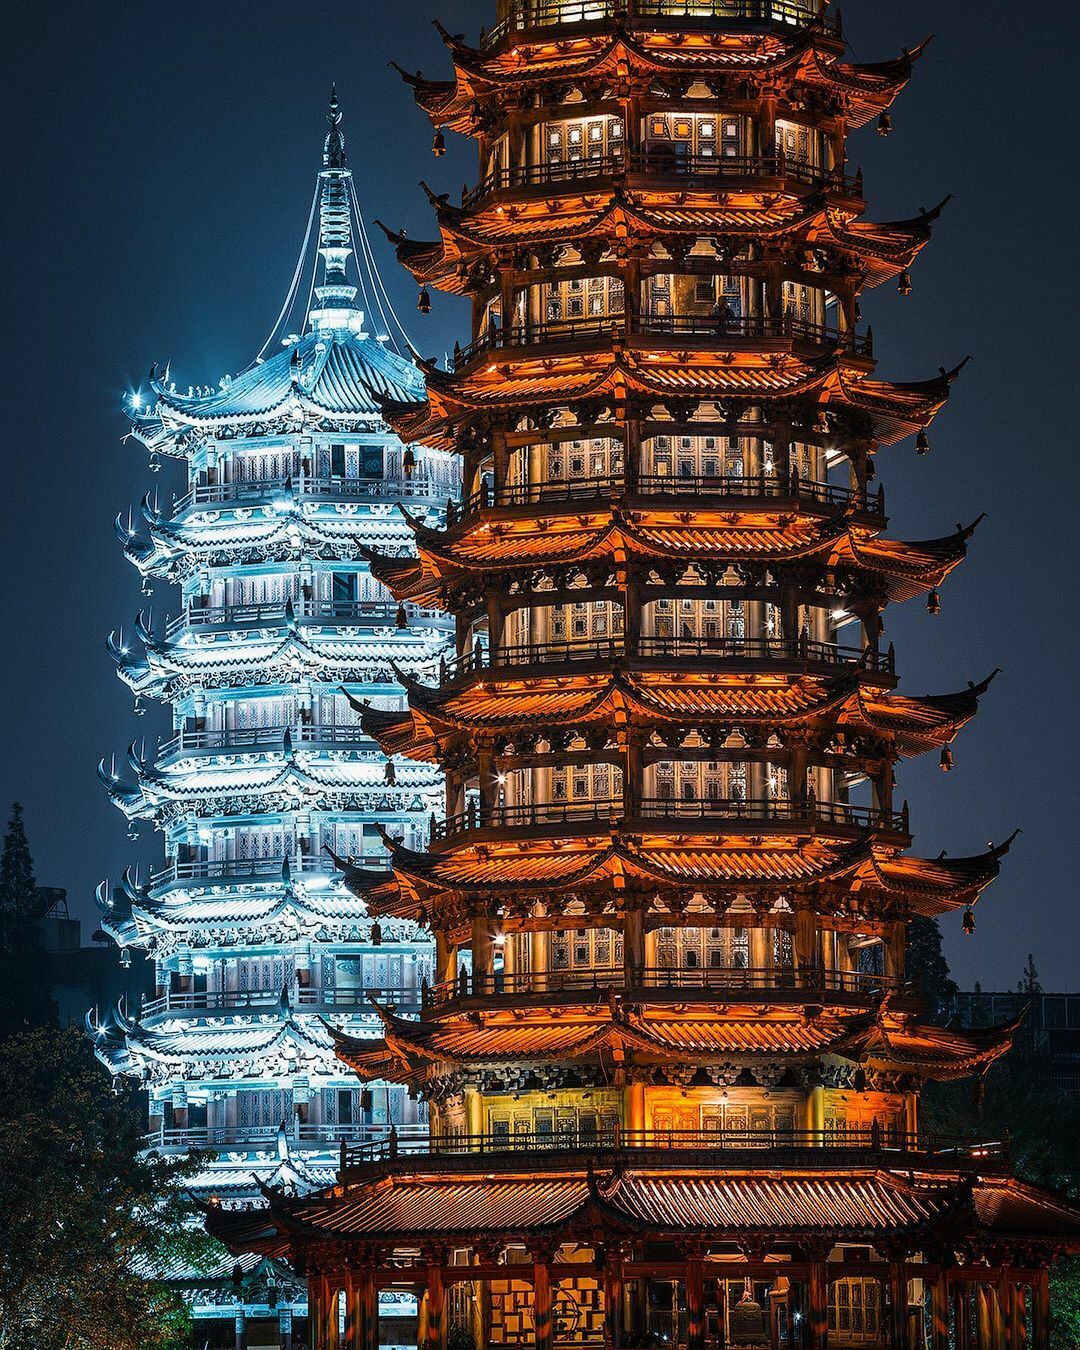 Sun And Moon Pagodas In Guilin, China